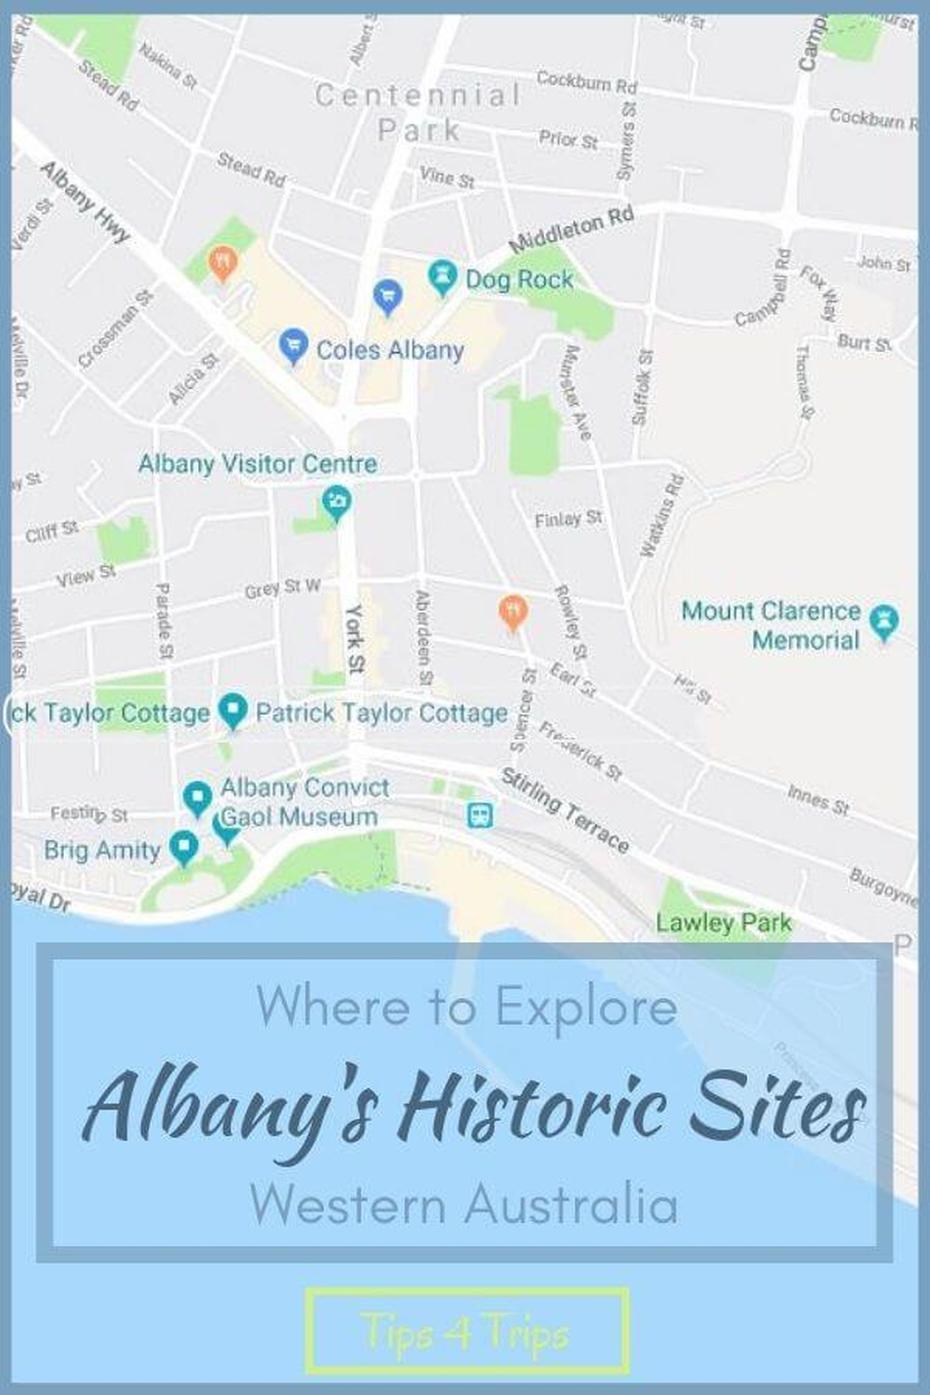 Discover Old Town Albany Wa  Historic Albany Sites – Tips 4 Trips, Albany, Australia, Australia Area, Albany Airport